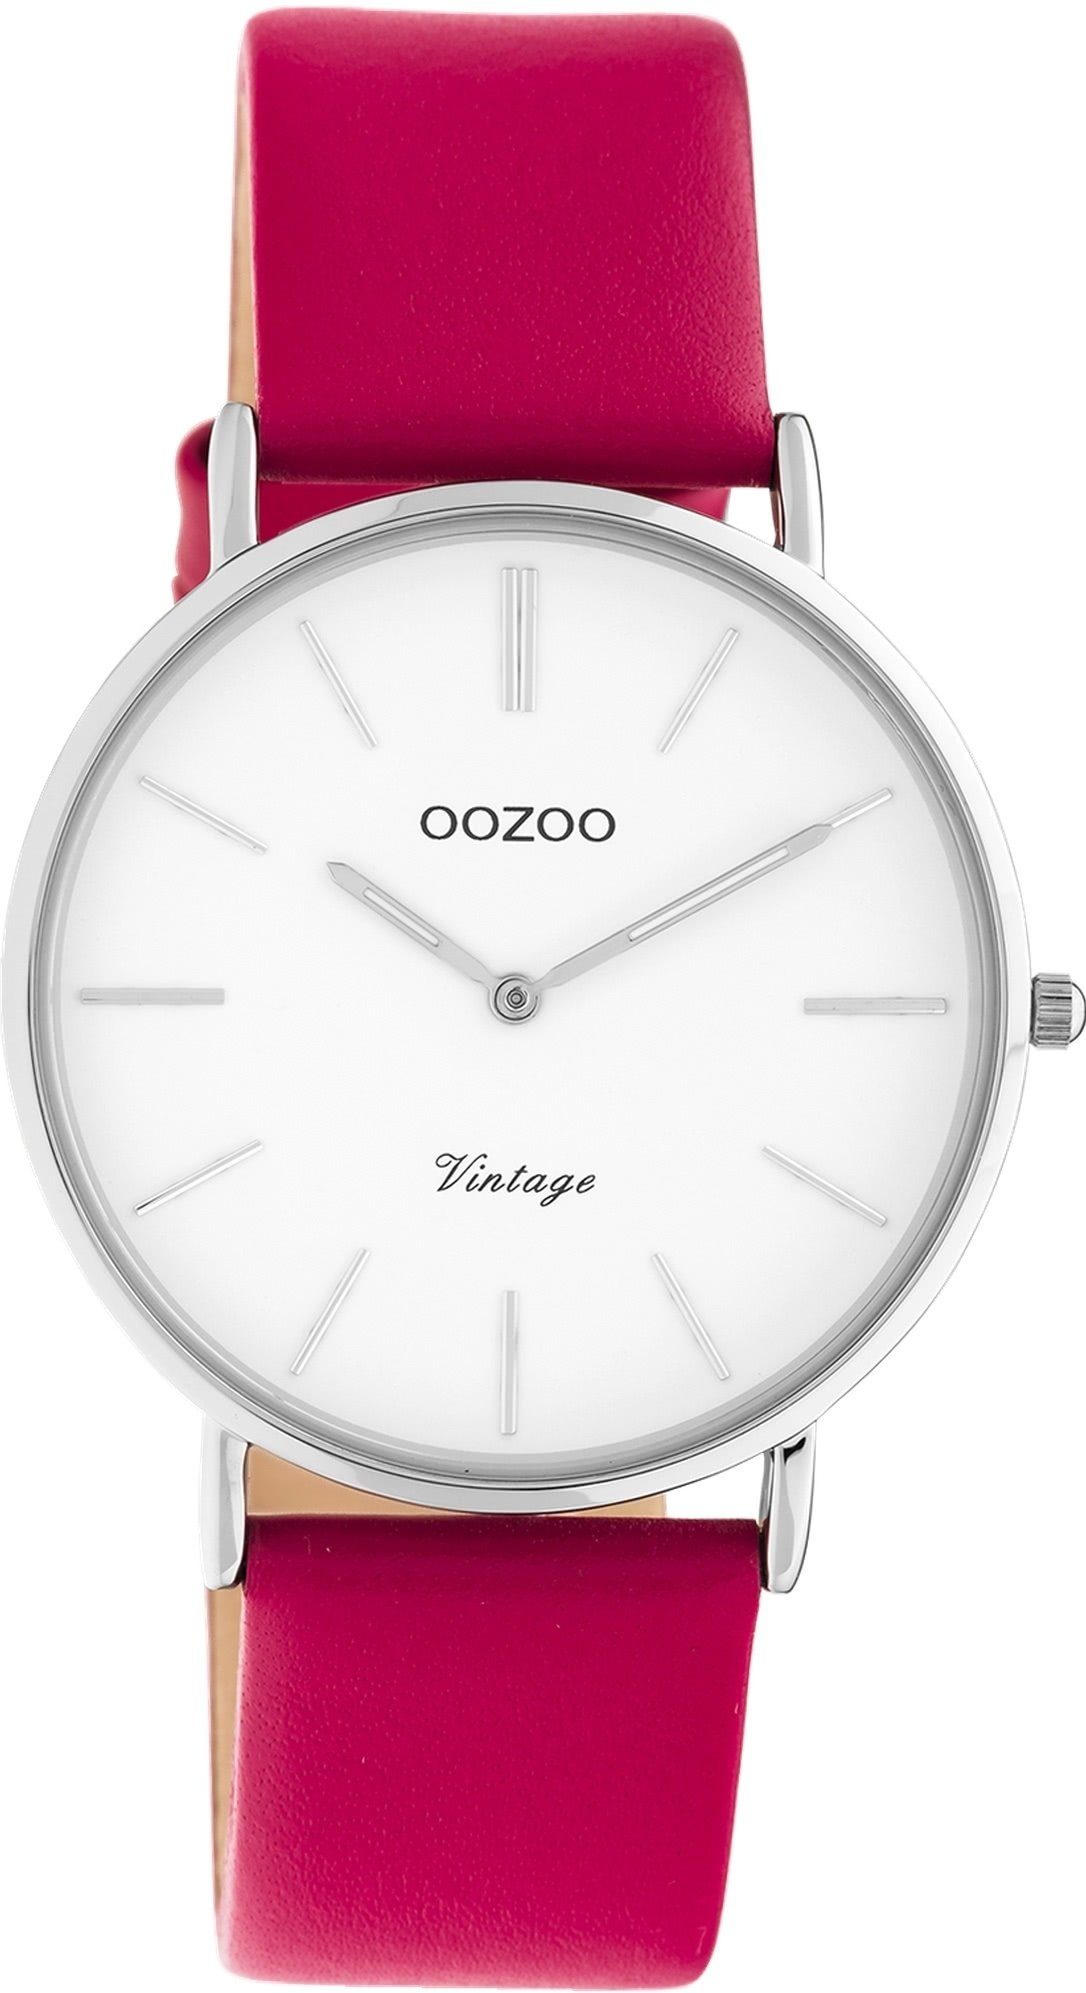 OOZOO Quarzuhr Oozoo Damen Armbanduhr rosa Analog, Damenuhr rund, mittel (ca. 36mm) Lederarmband, Fashion-Style